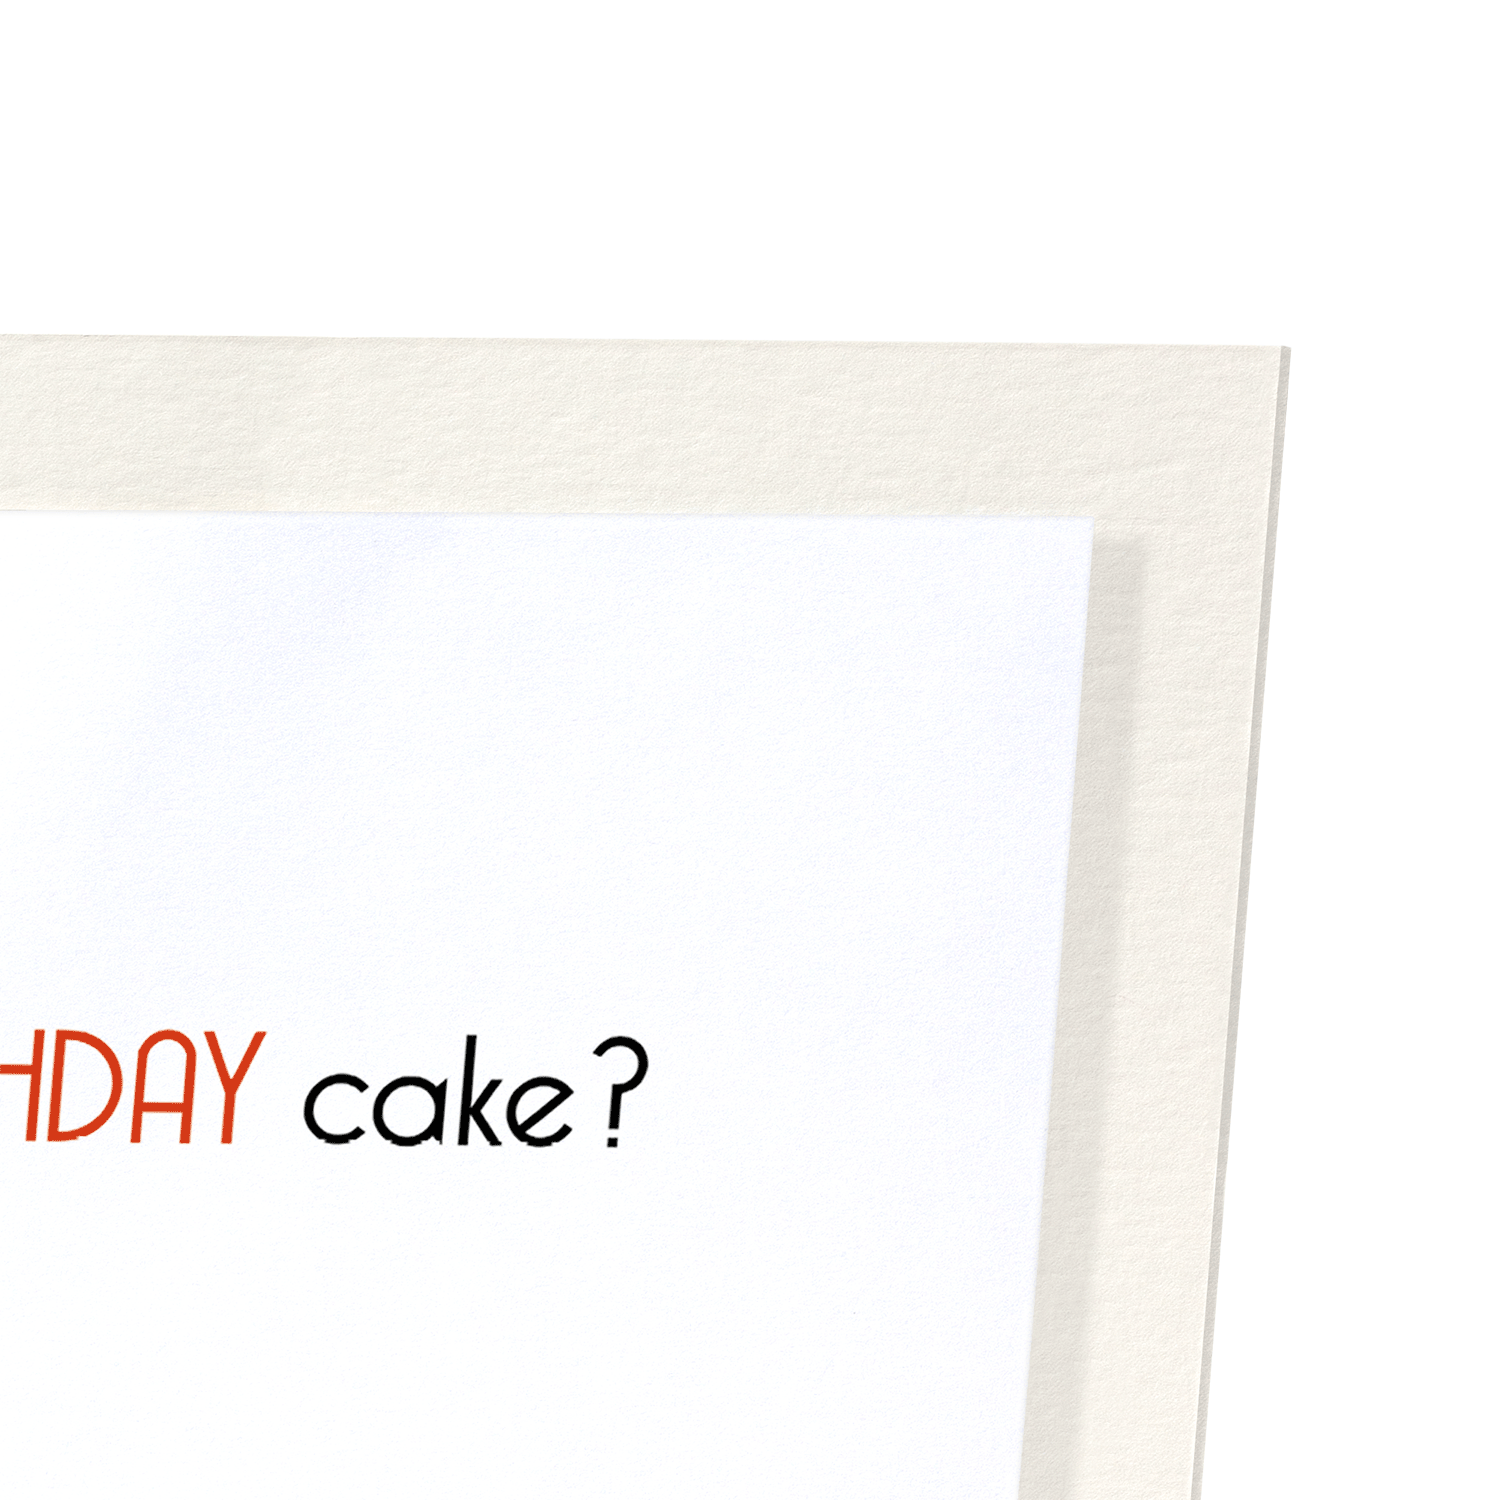 DO I SMELL BIRTHDAY CAKE?